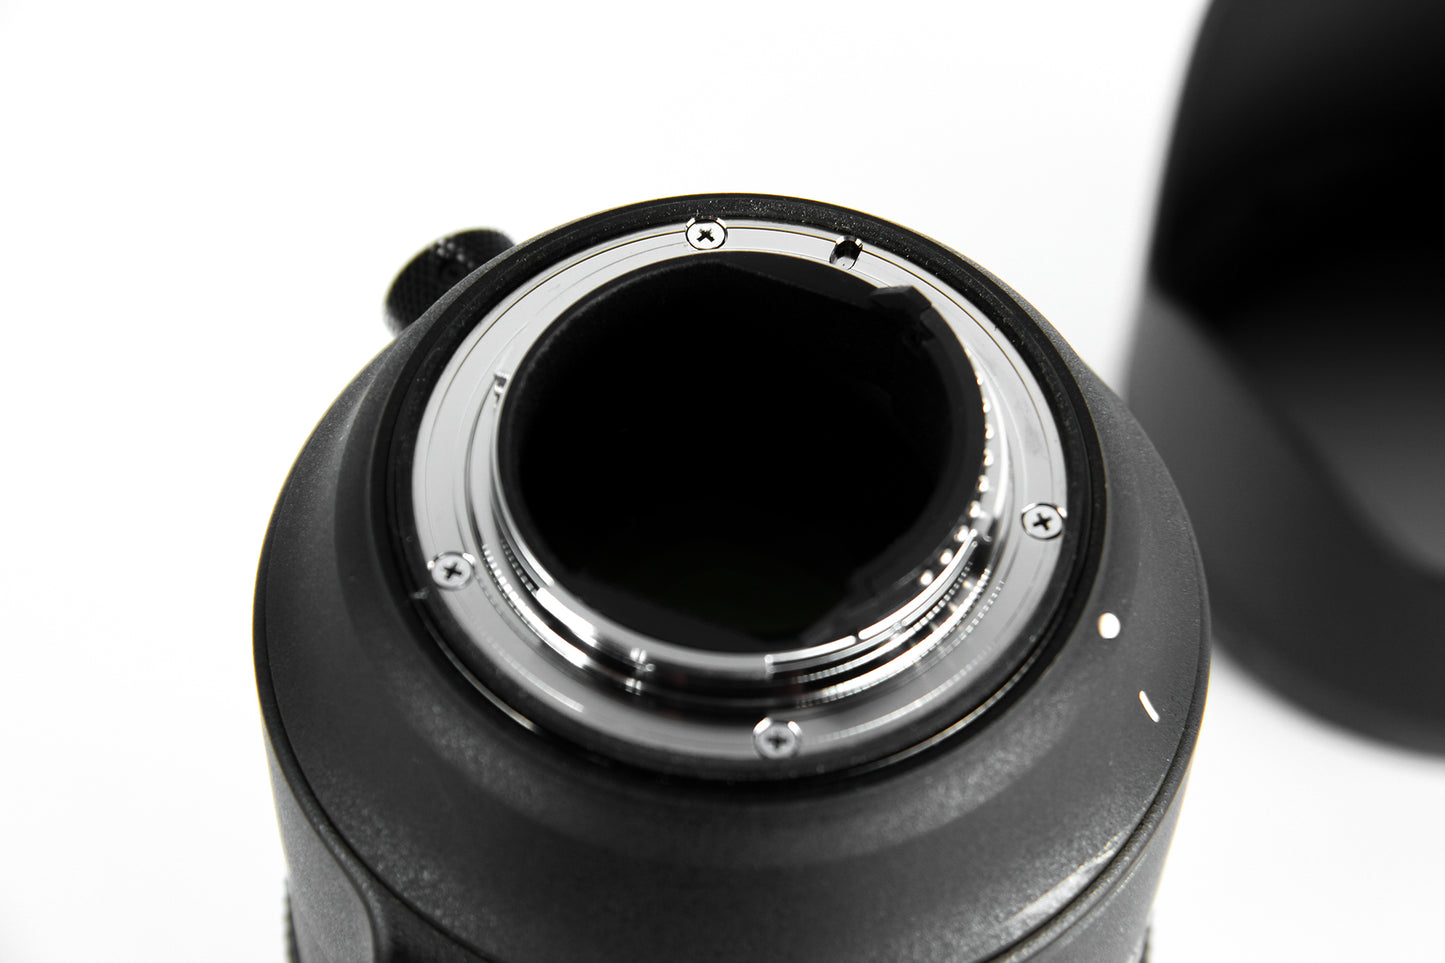 Sigma 70-200mmF/2.8 DG Lens for Nikon